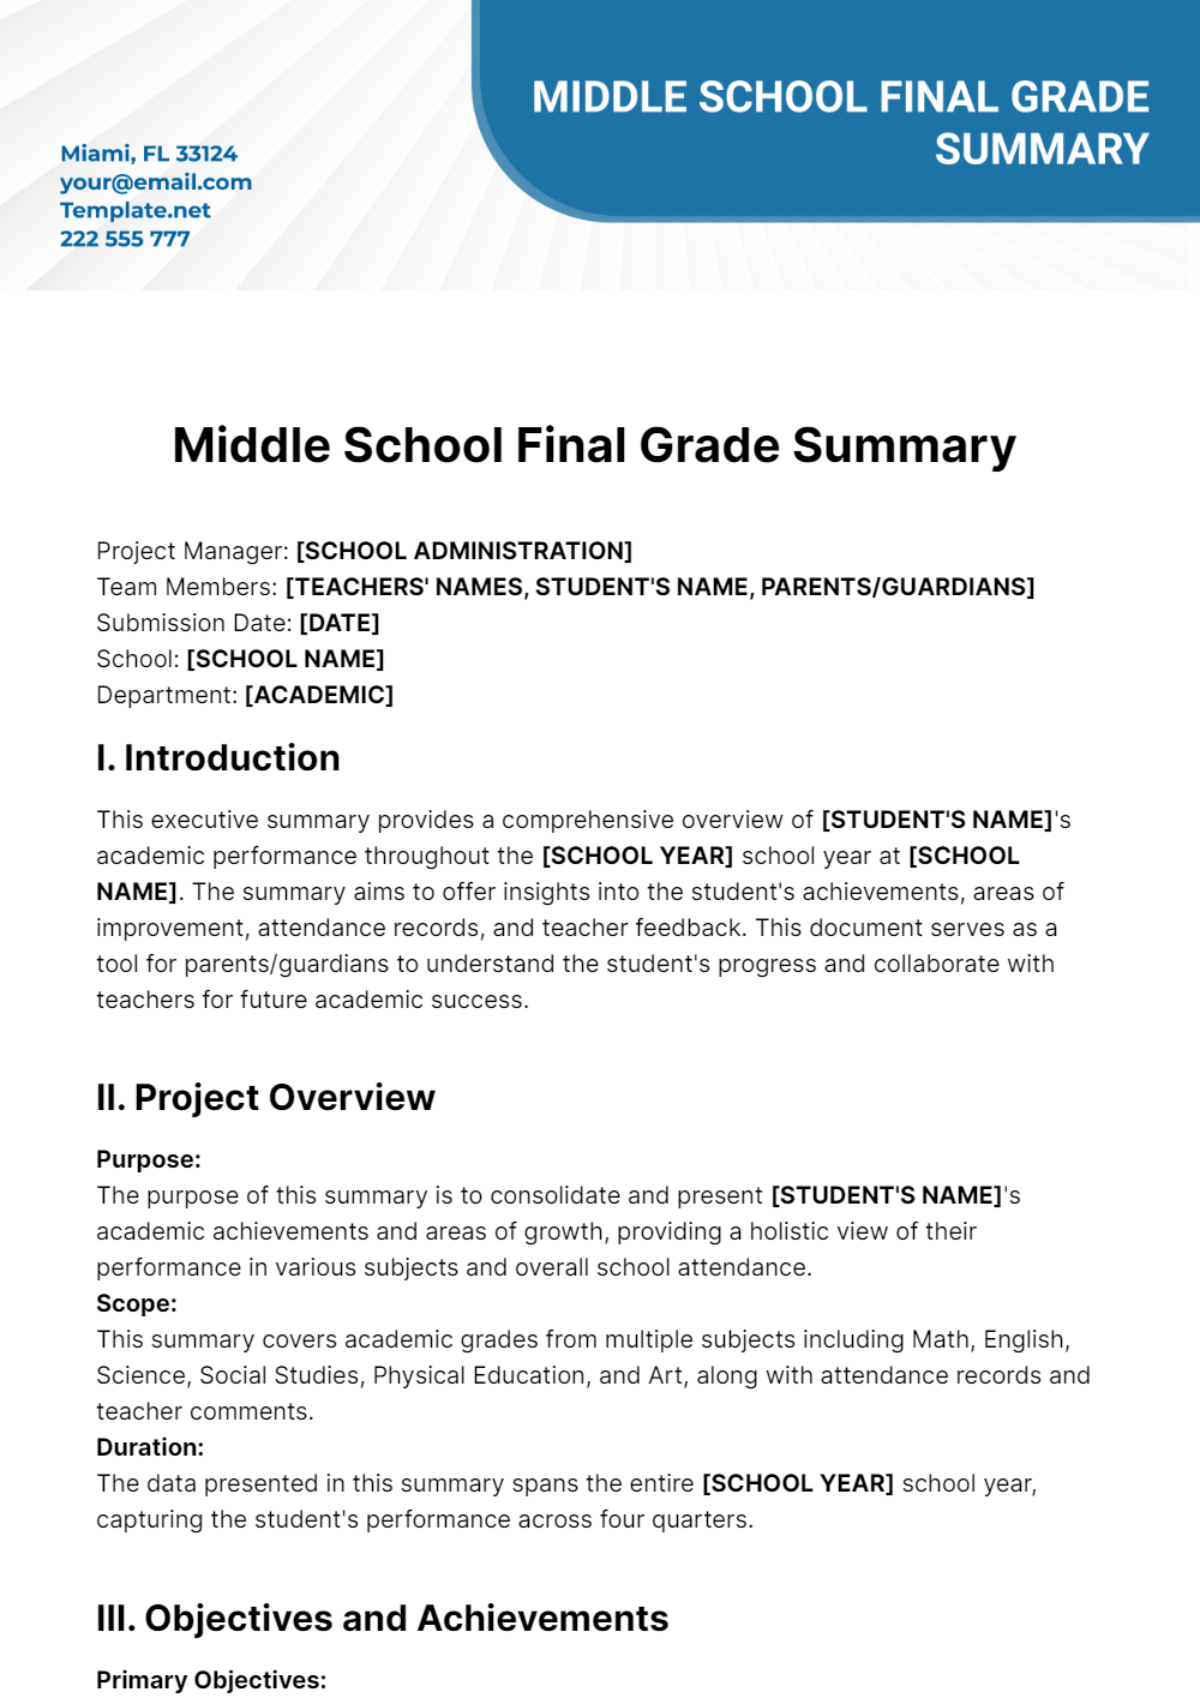 Middle School Final Grade Summary Template